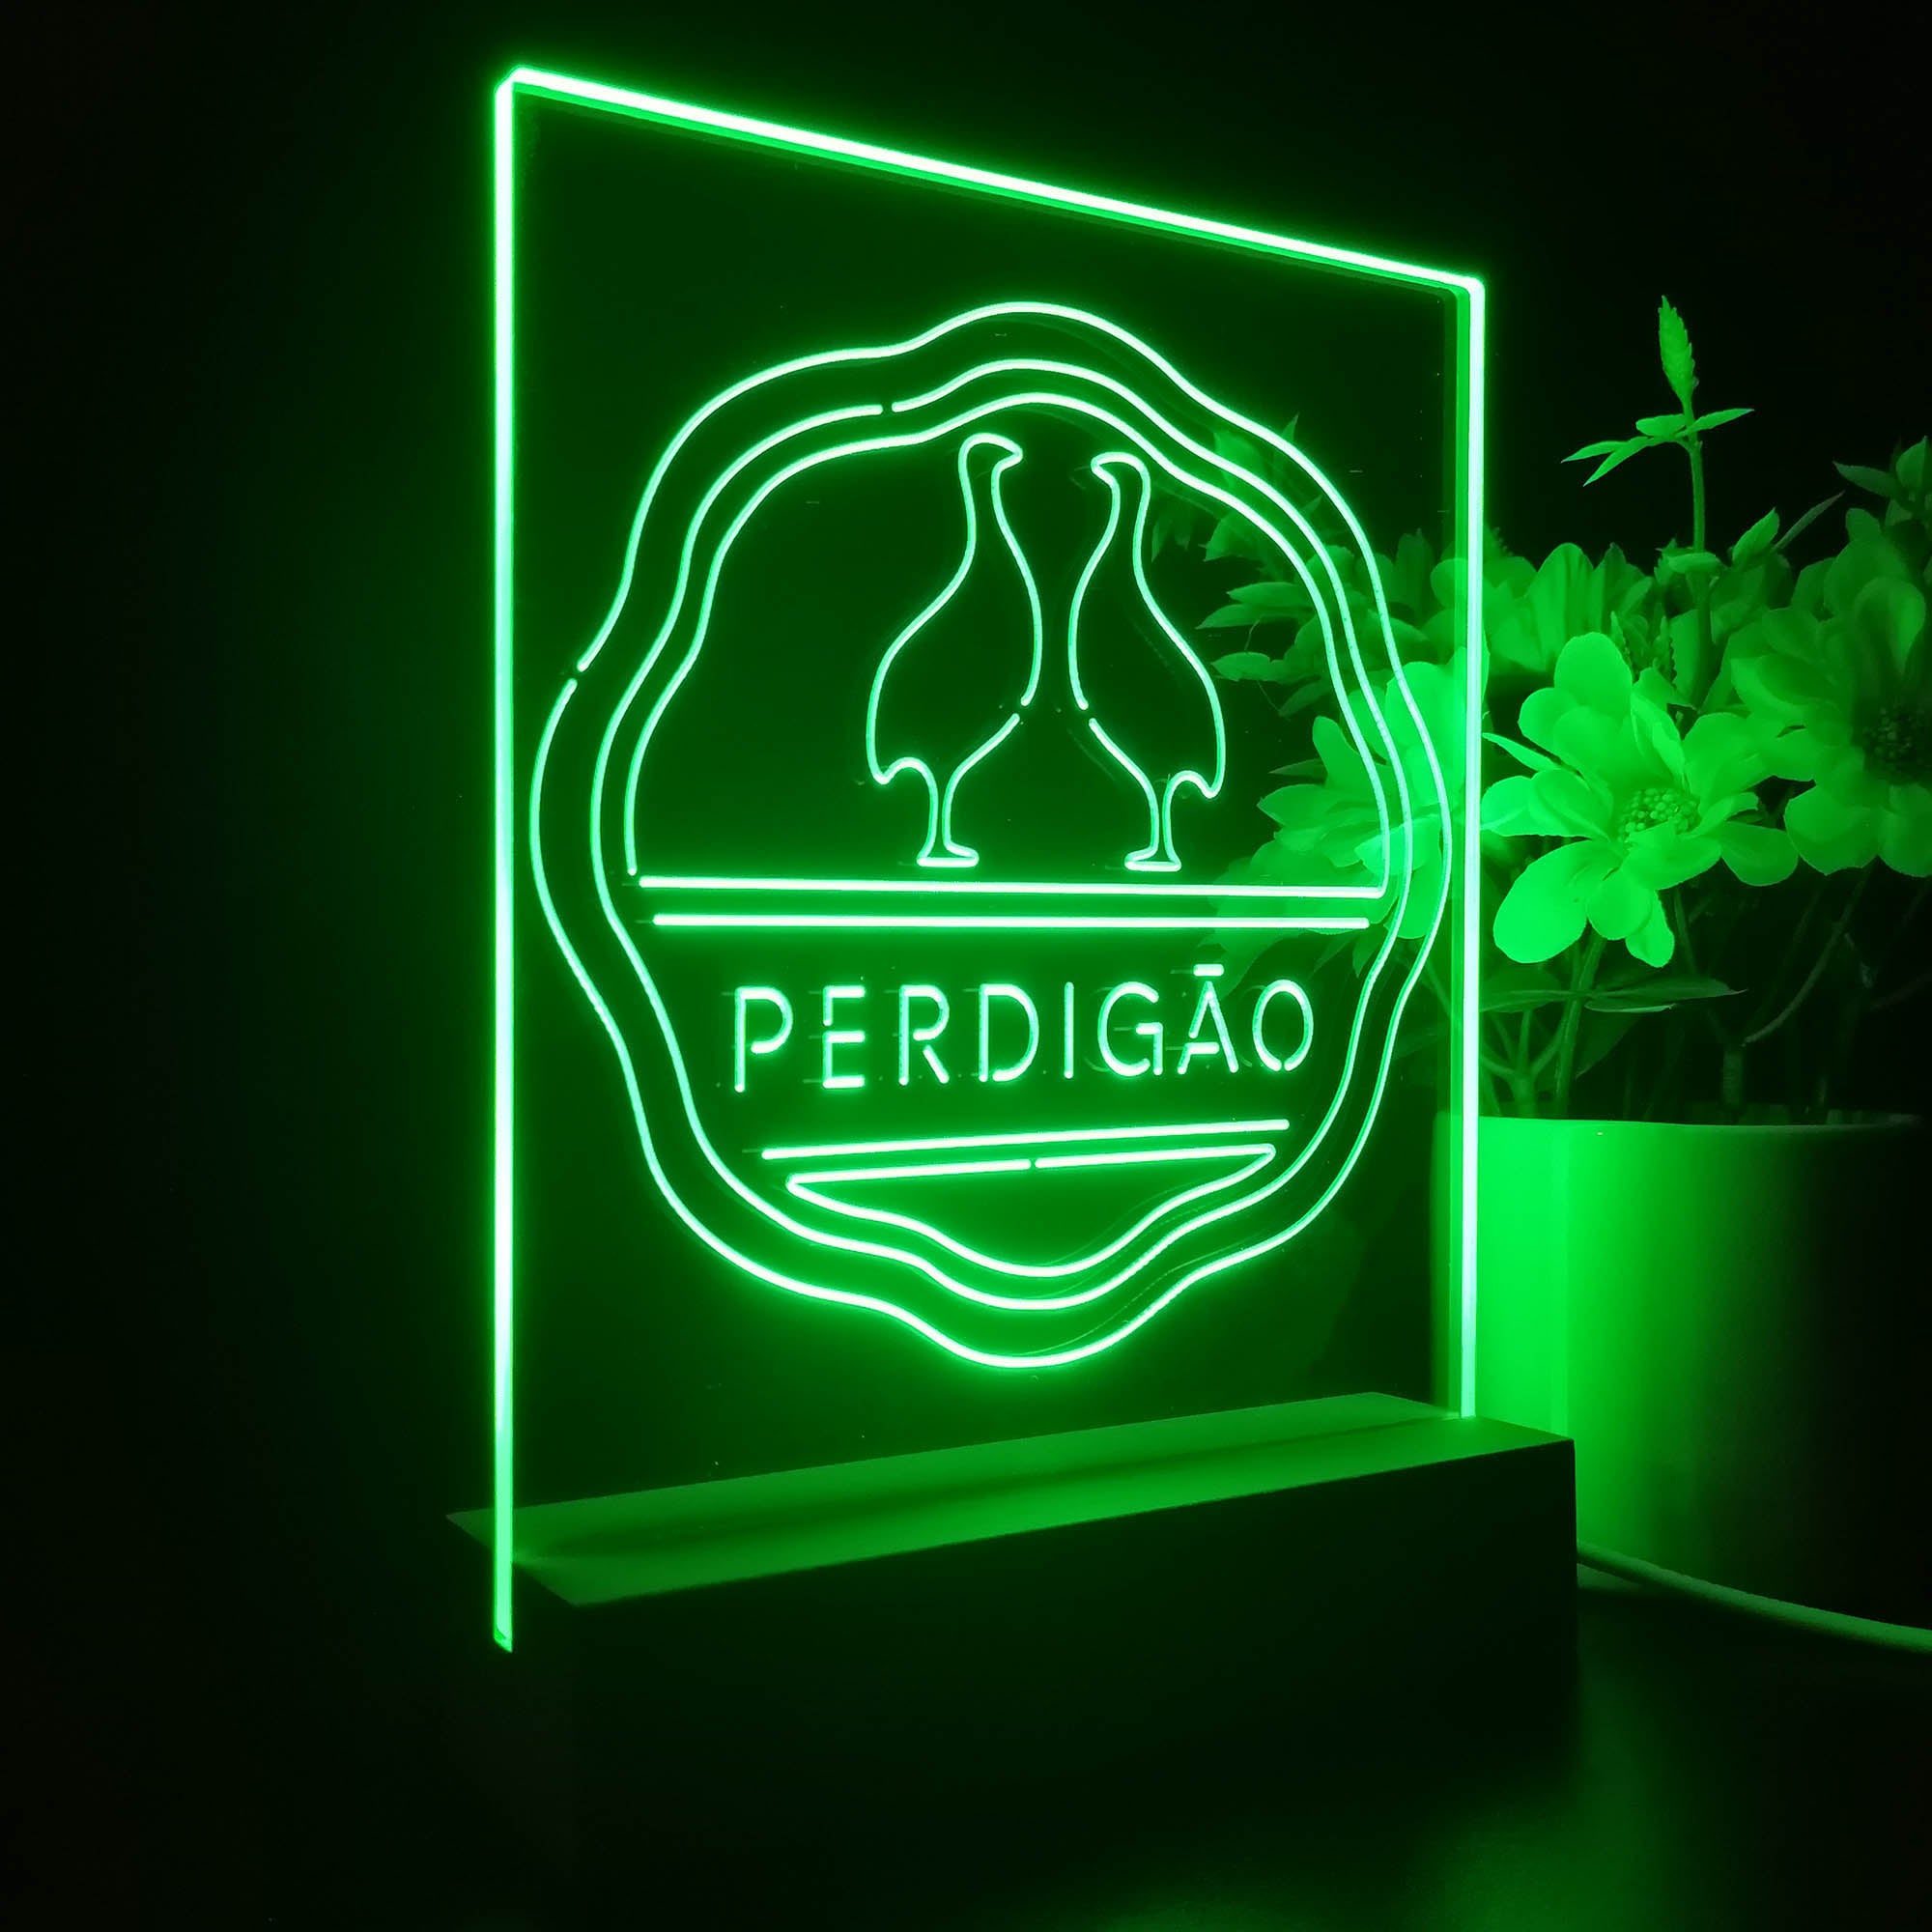 PERDIGAO Night Light LED Sign